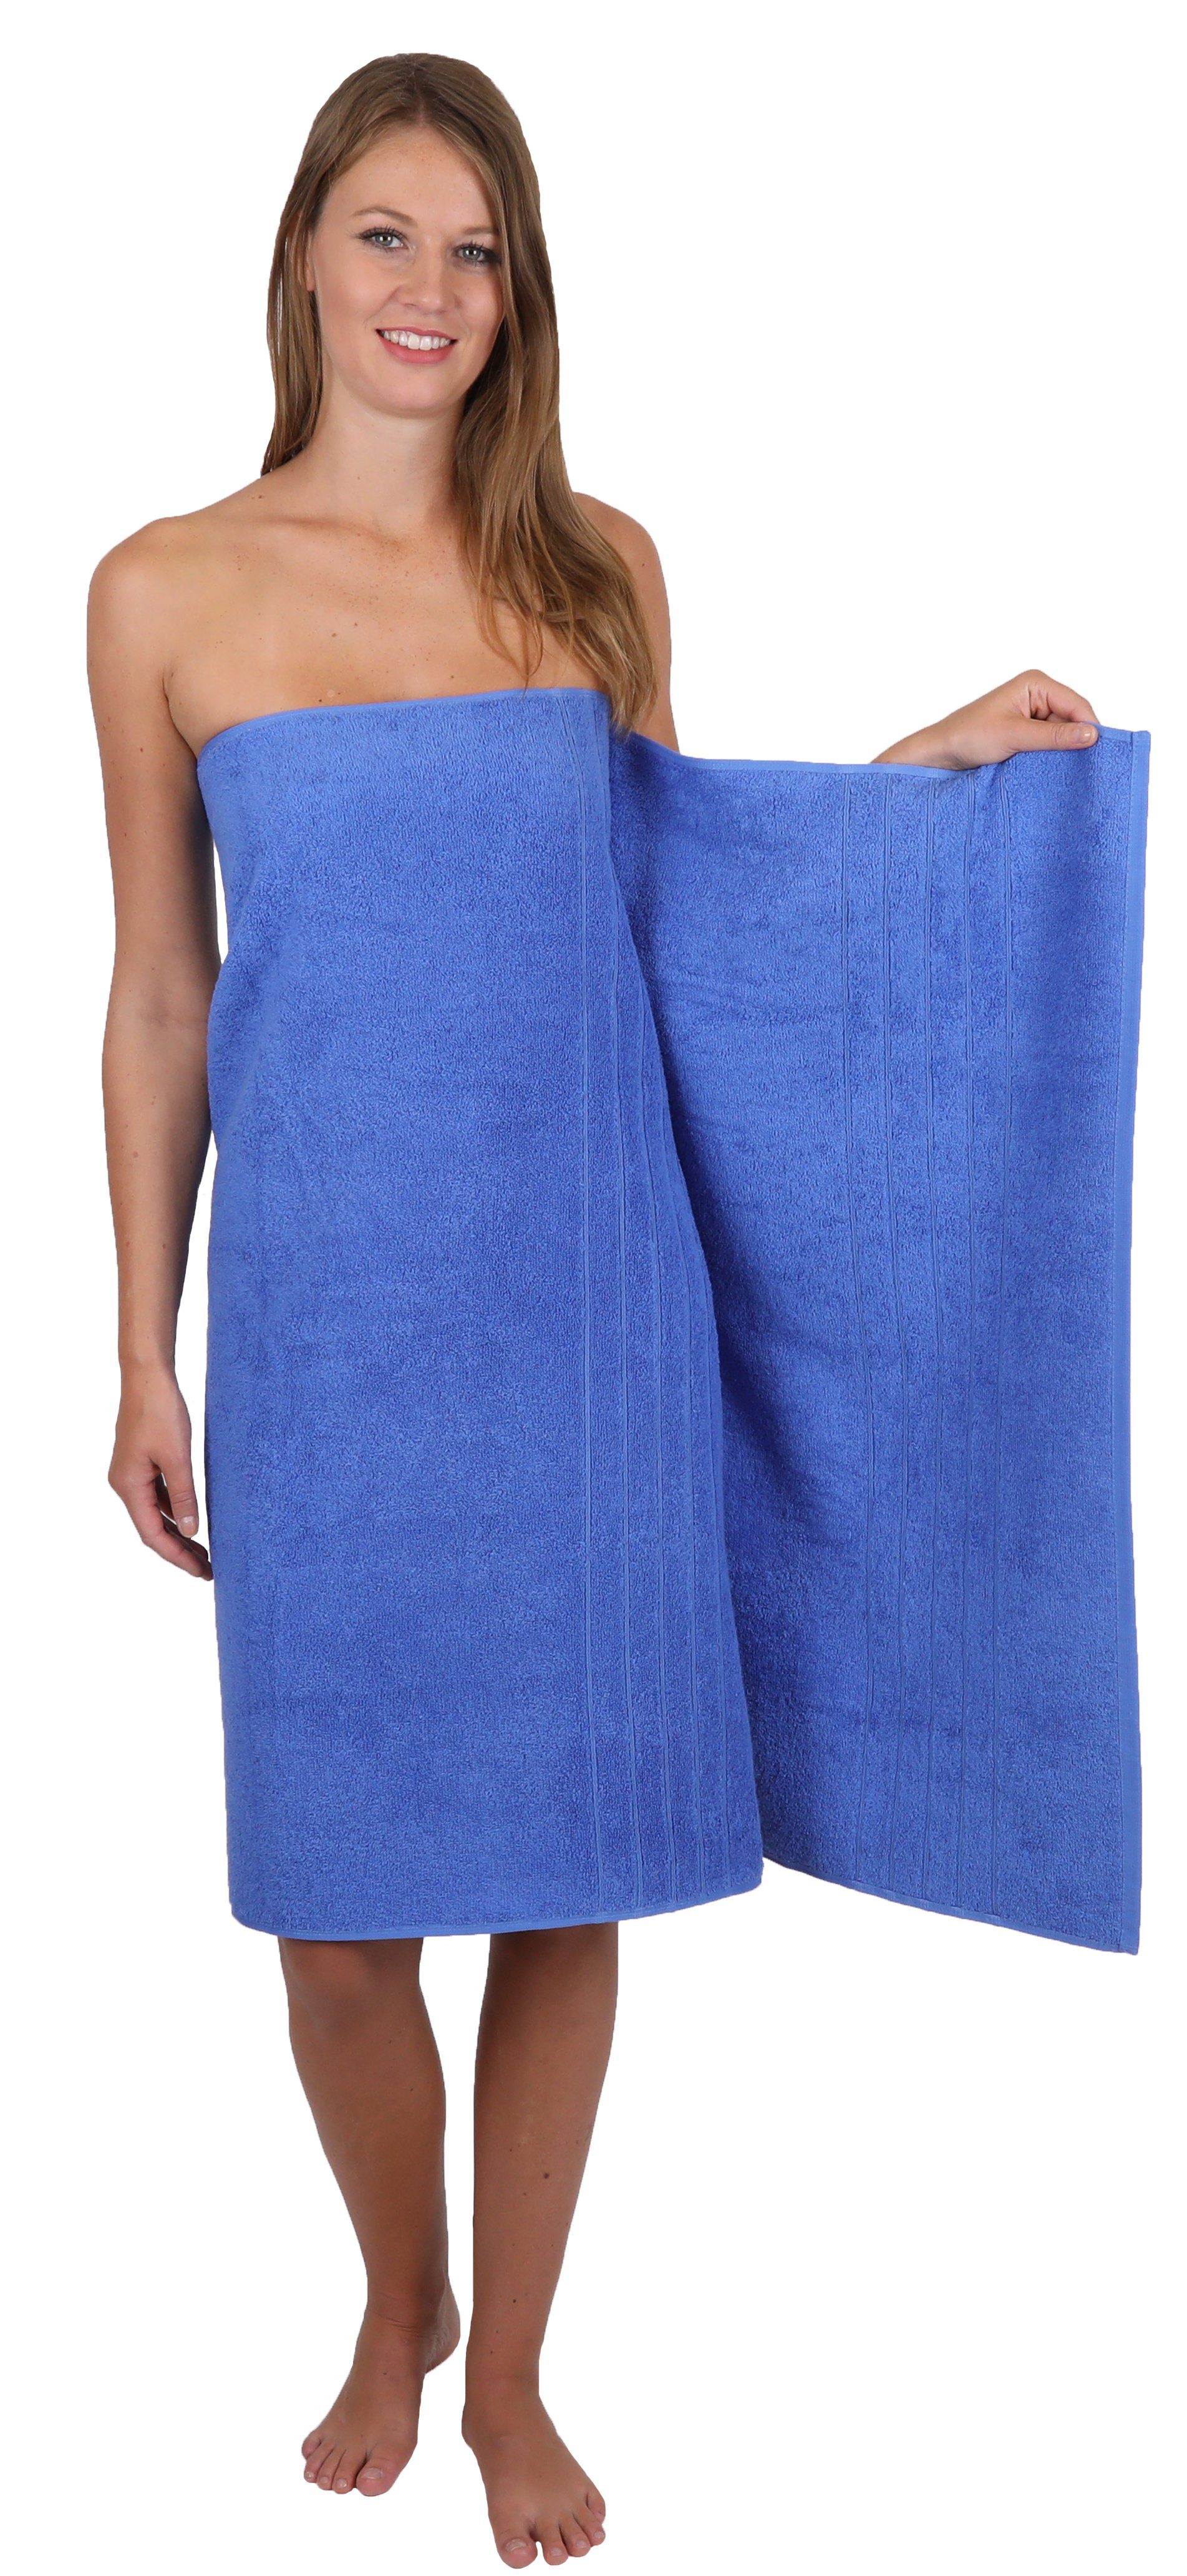 2 Baumwolle, 8-TLG. blau, Farbe 2 Handtuch (8-tlg) 2 Pflaume Set Deluxe 100% Handtuch-Set Handtücher 100% Duschtücher Baumwolle Seiftücher Badetücher und Betz 2